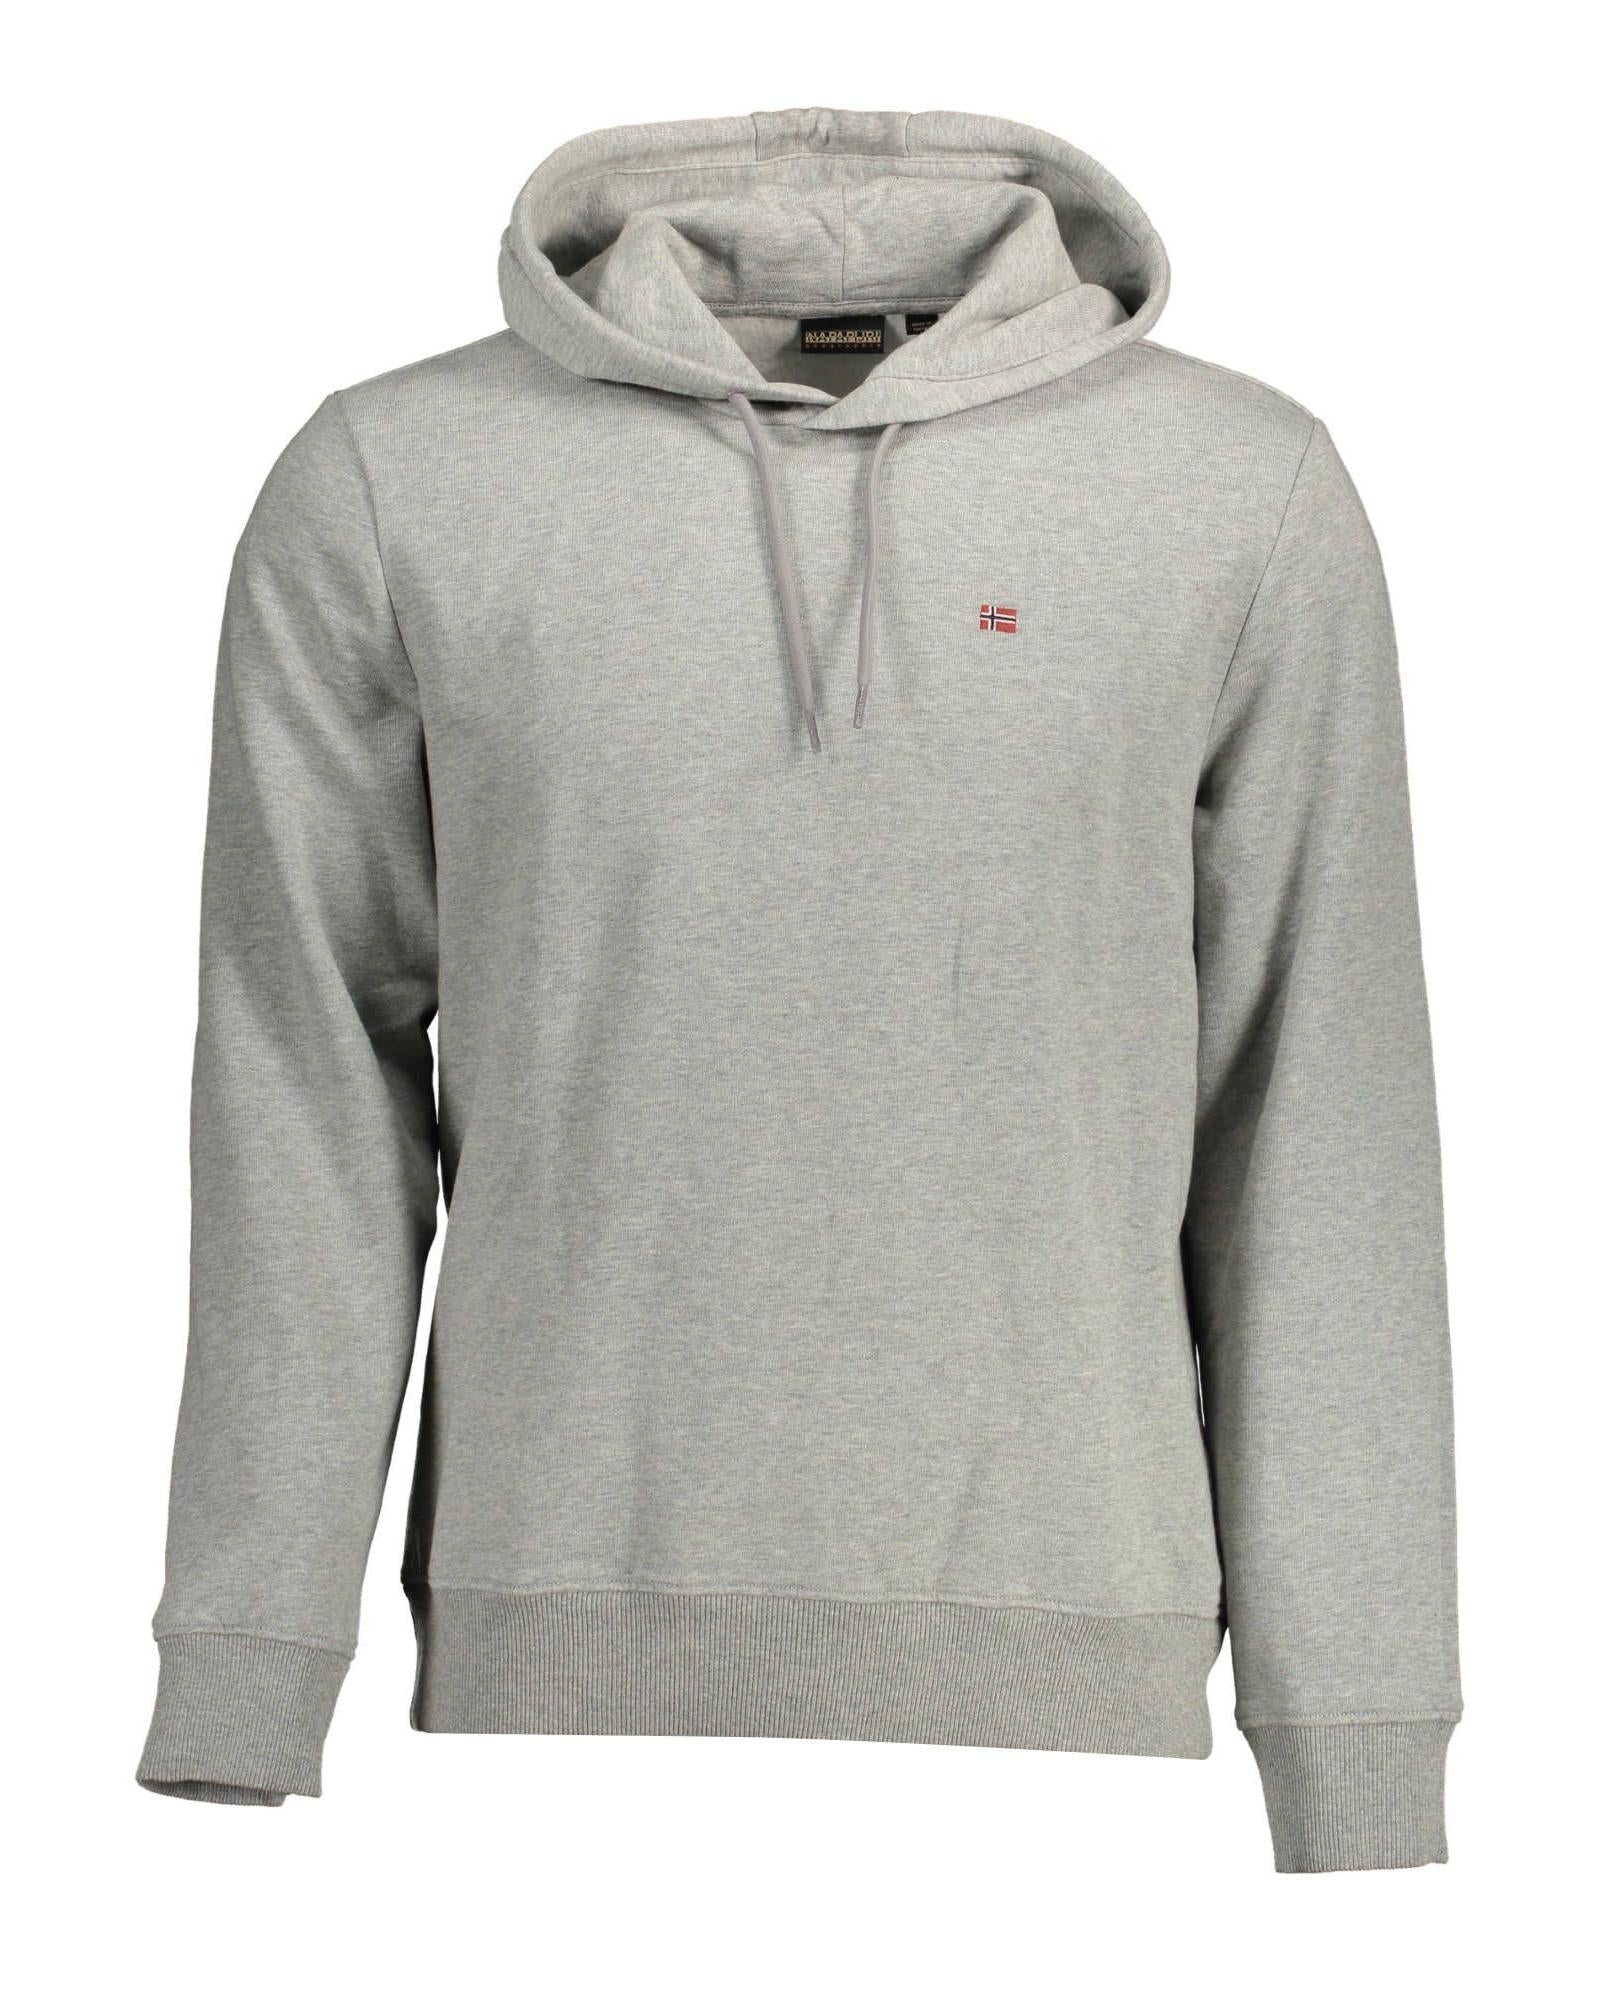 Men's Gray Cotton Sweater - 3XL